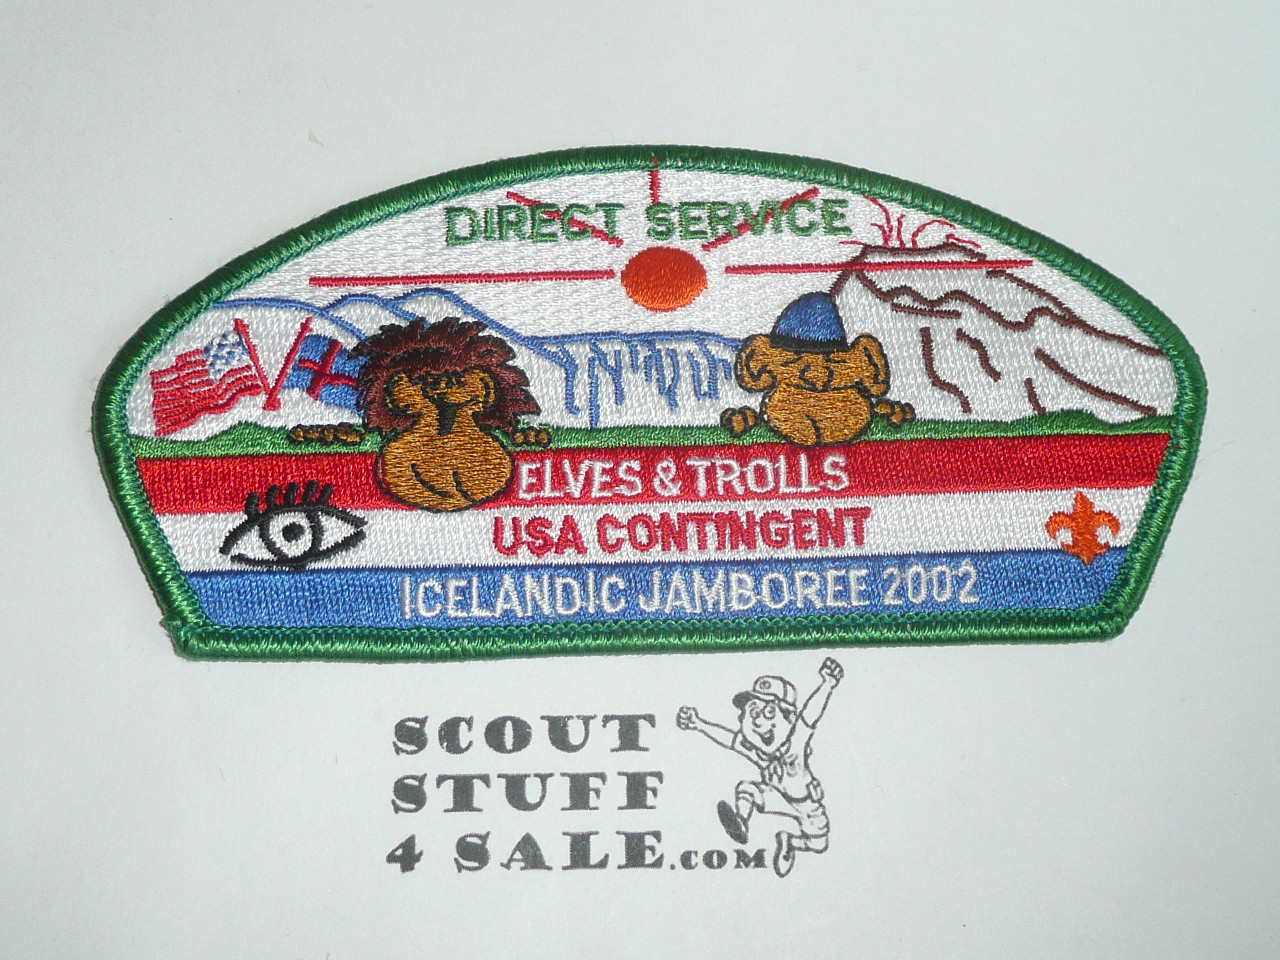 Direct Service Council ICELAND sa7 CSP, 2002 USA JSP to Icelandic Jamboree